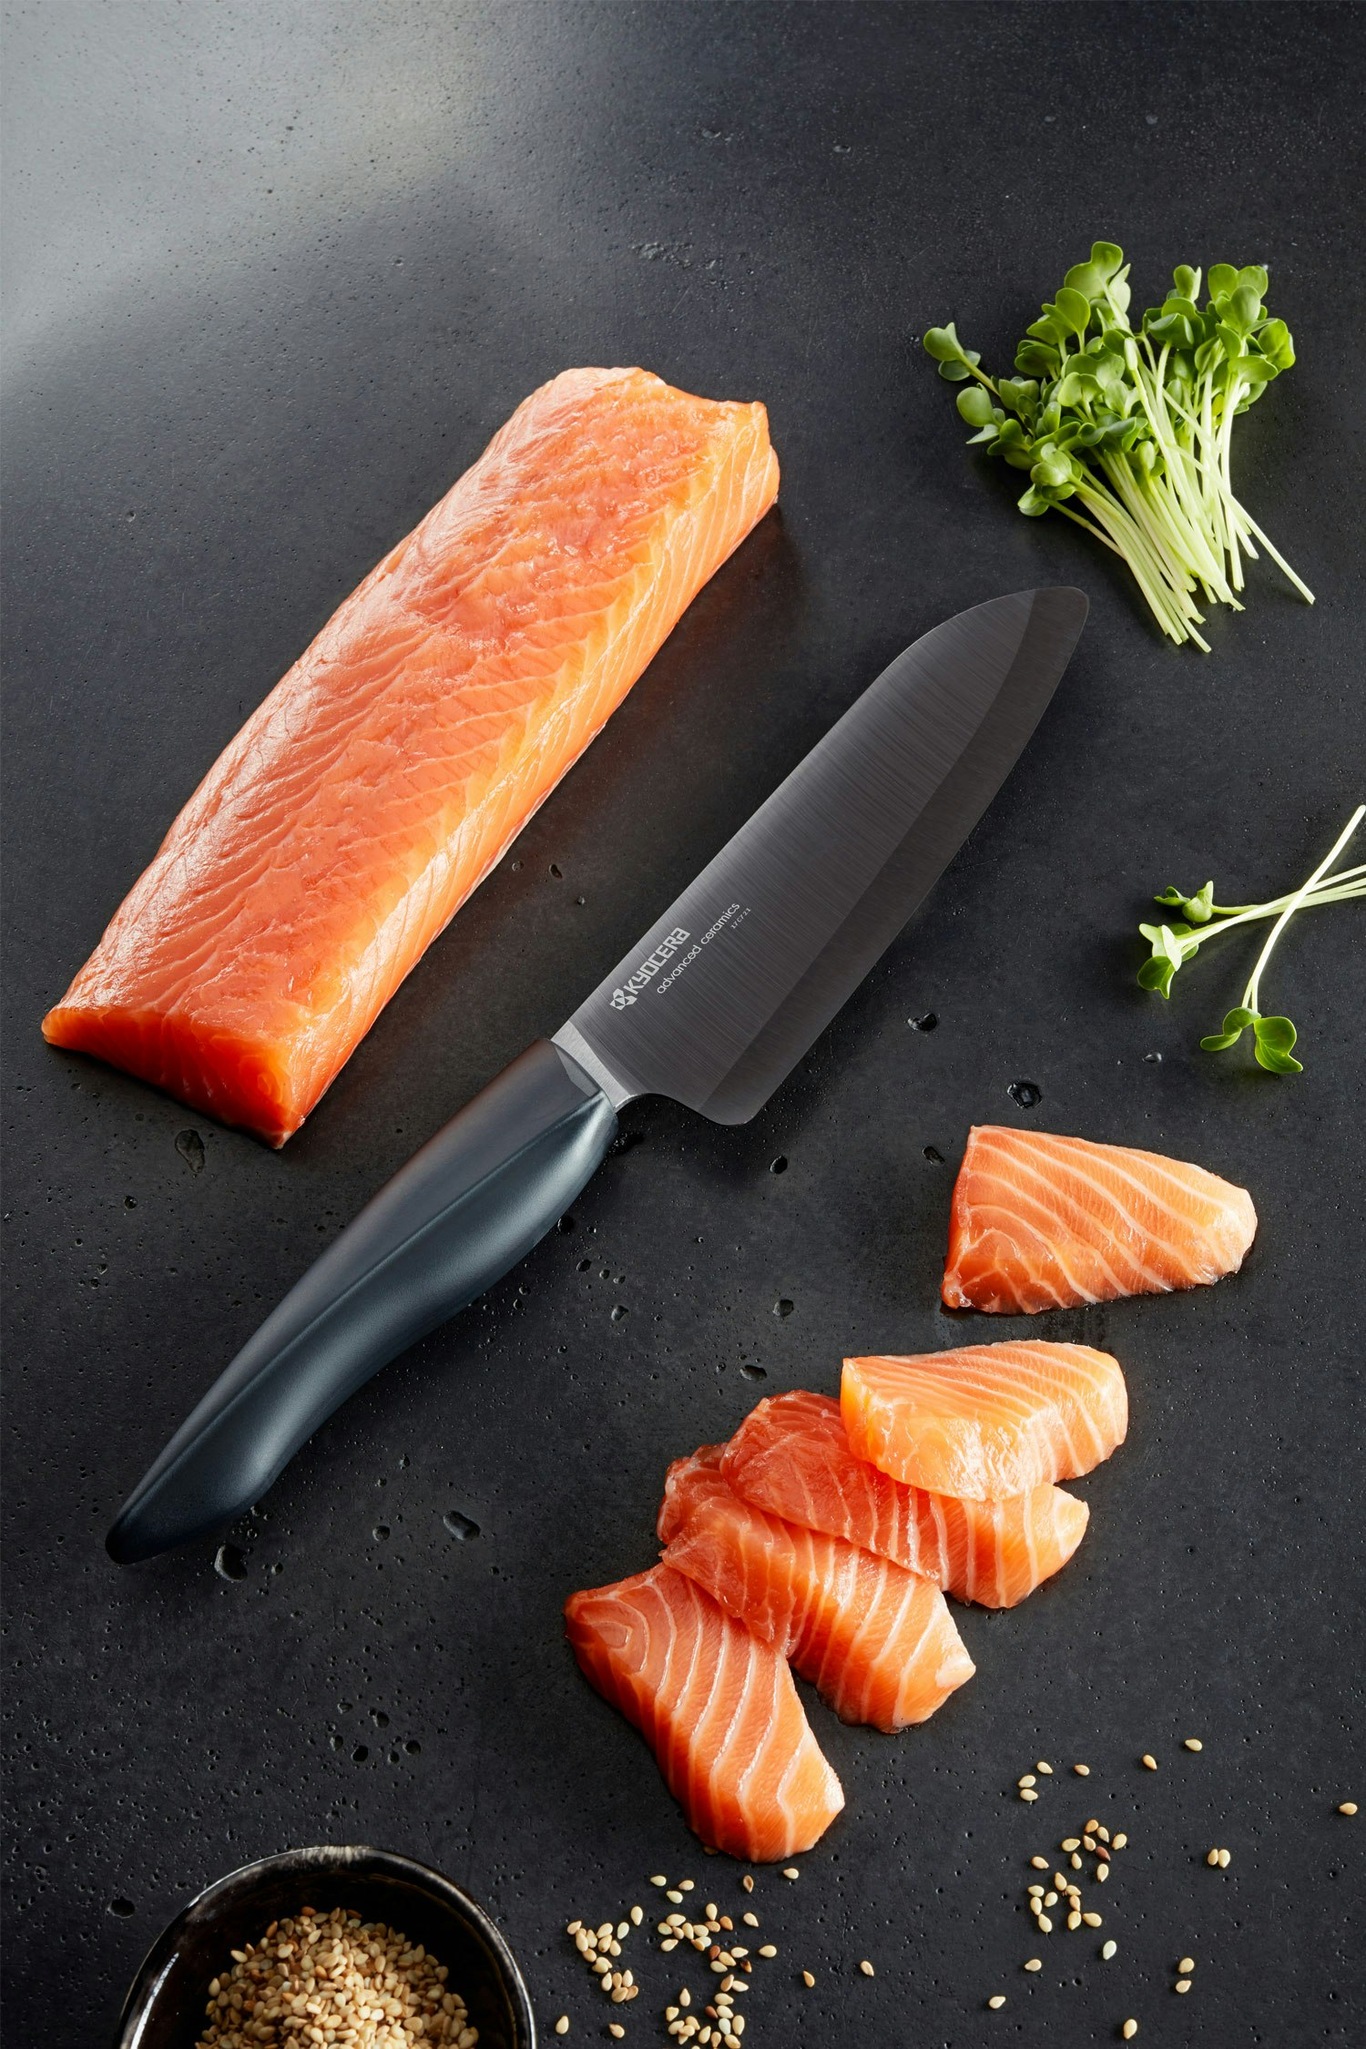 https://royaldesign.com/image/2/kyocera-shin-chef-knife-santoku-knife-16-cm-black-1?w=800&quality=80